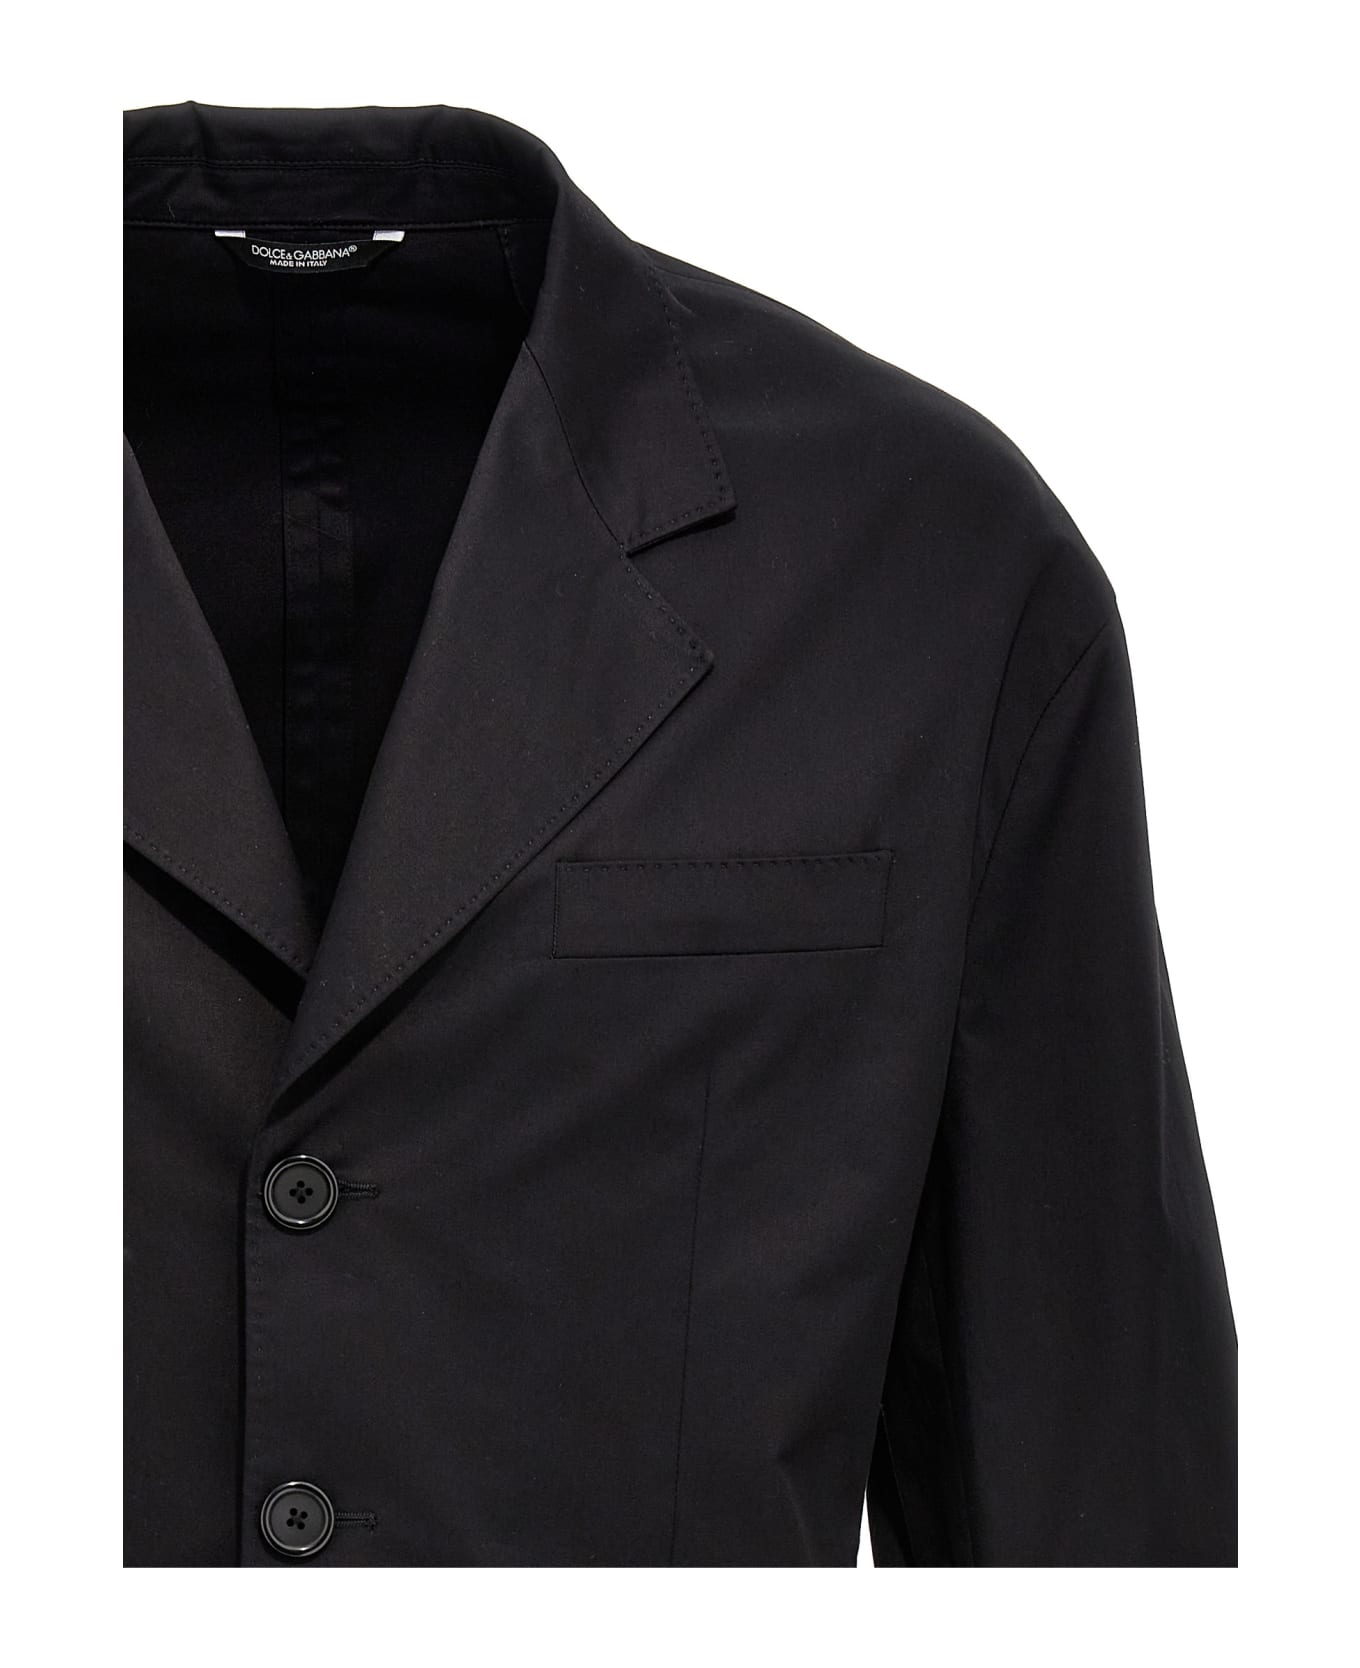 Dolce & Gabbana 're-edition S/s 1992' Blazer Jacket - Black   コート